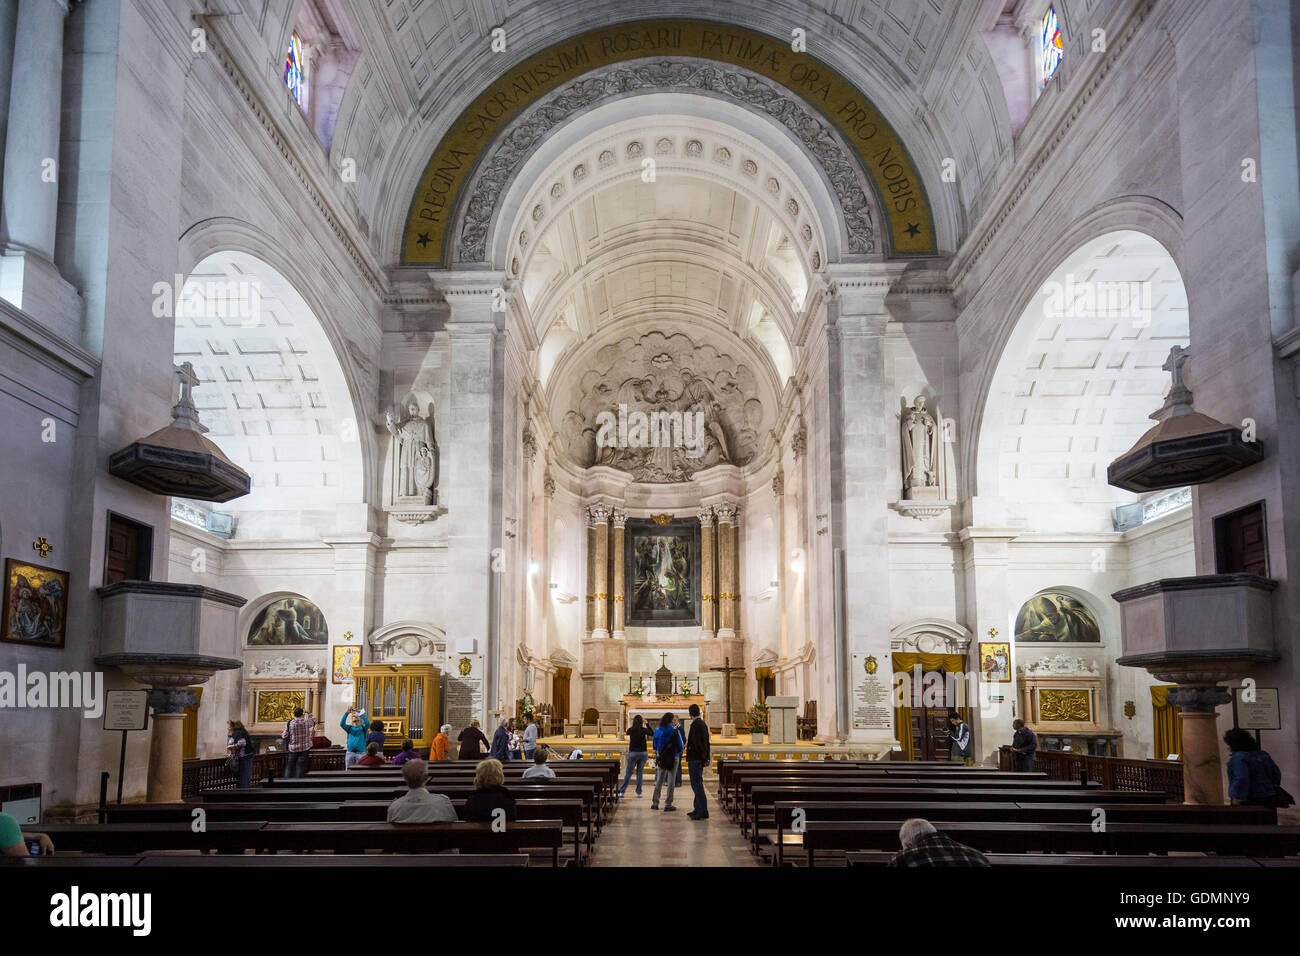 Innenraum der Basilika Antiga Em Fatima, Fatima, Santarem, Portugal, Europa, Reisen, Reise-Fotografie Stockfoto